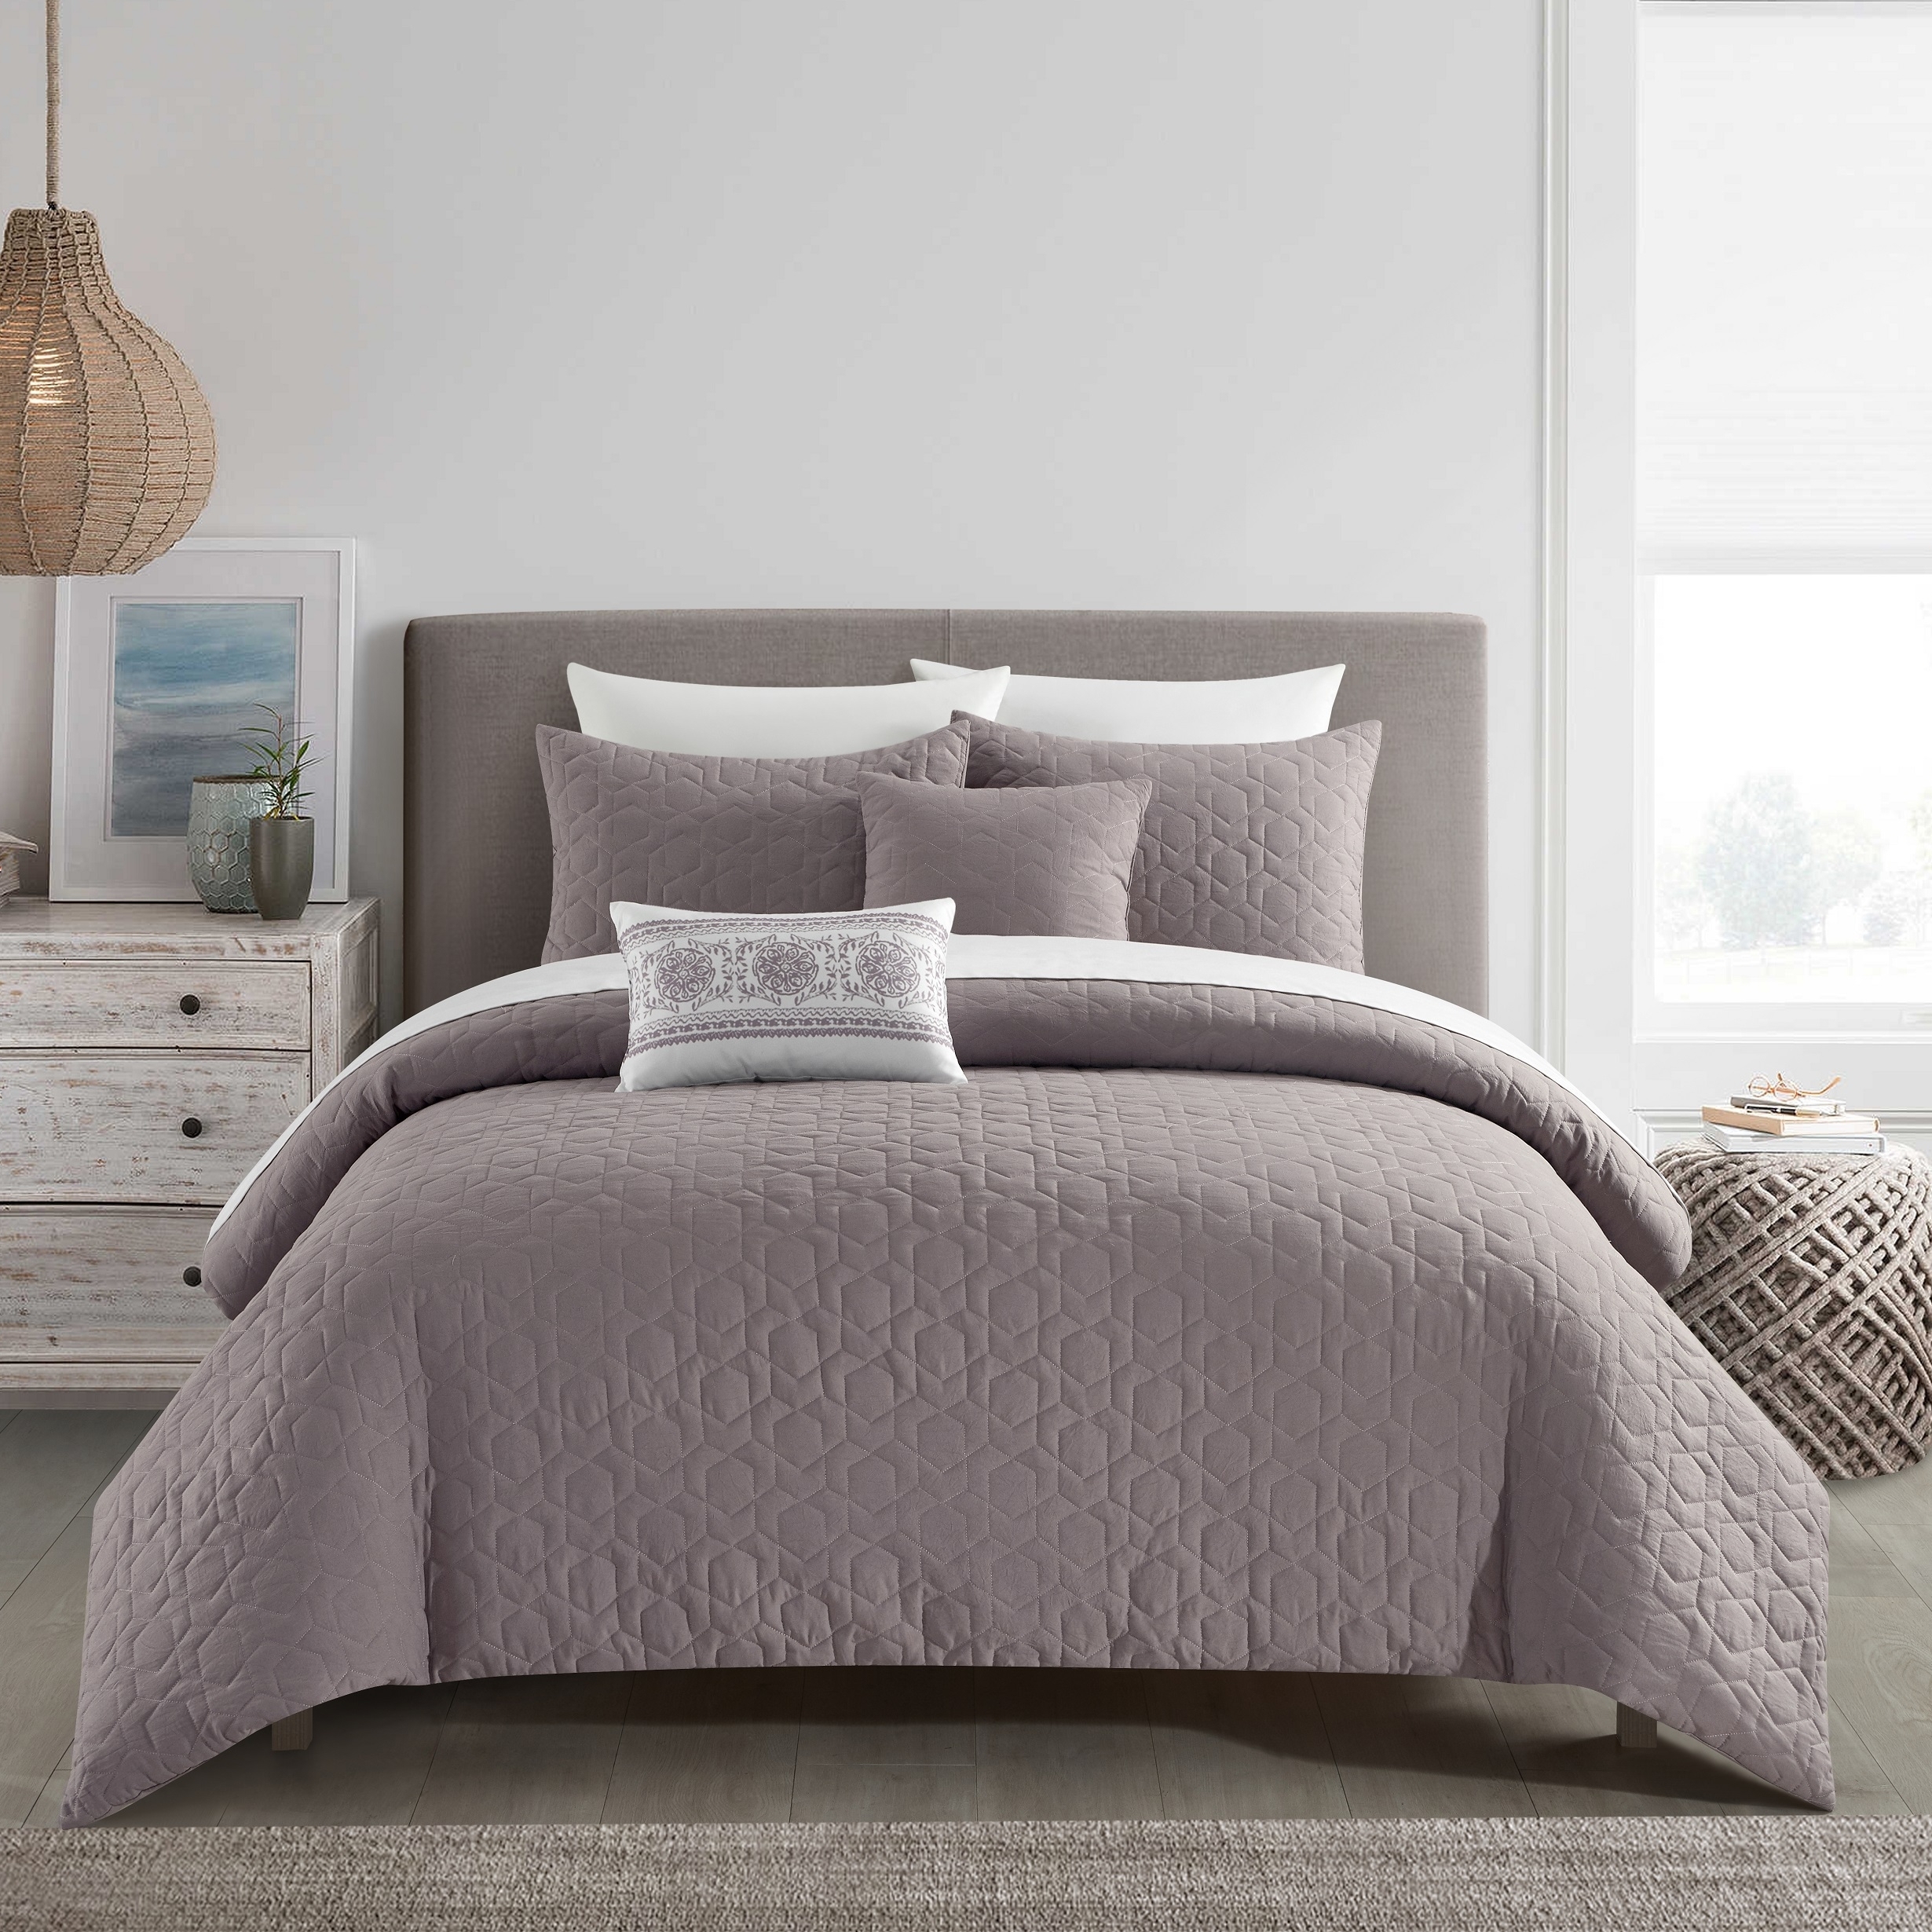 NY&C Home Cavina 5 Piece Comforter Set Geometric Hexagonal Pattern - Lavender, Queen